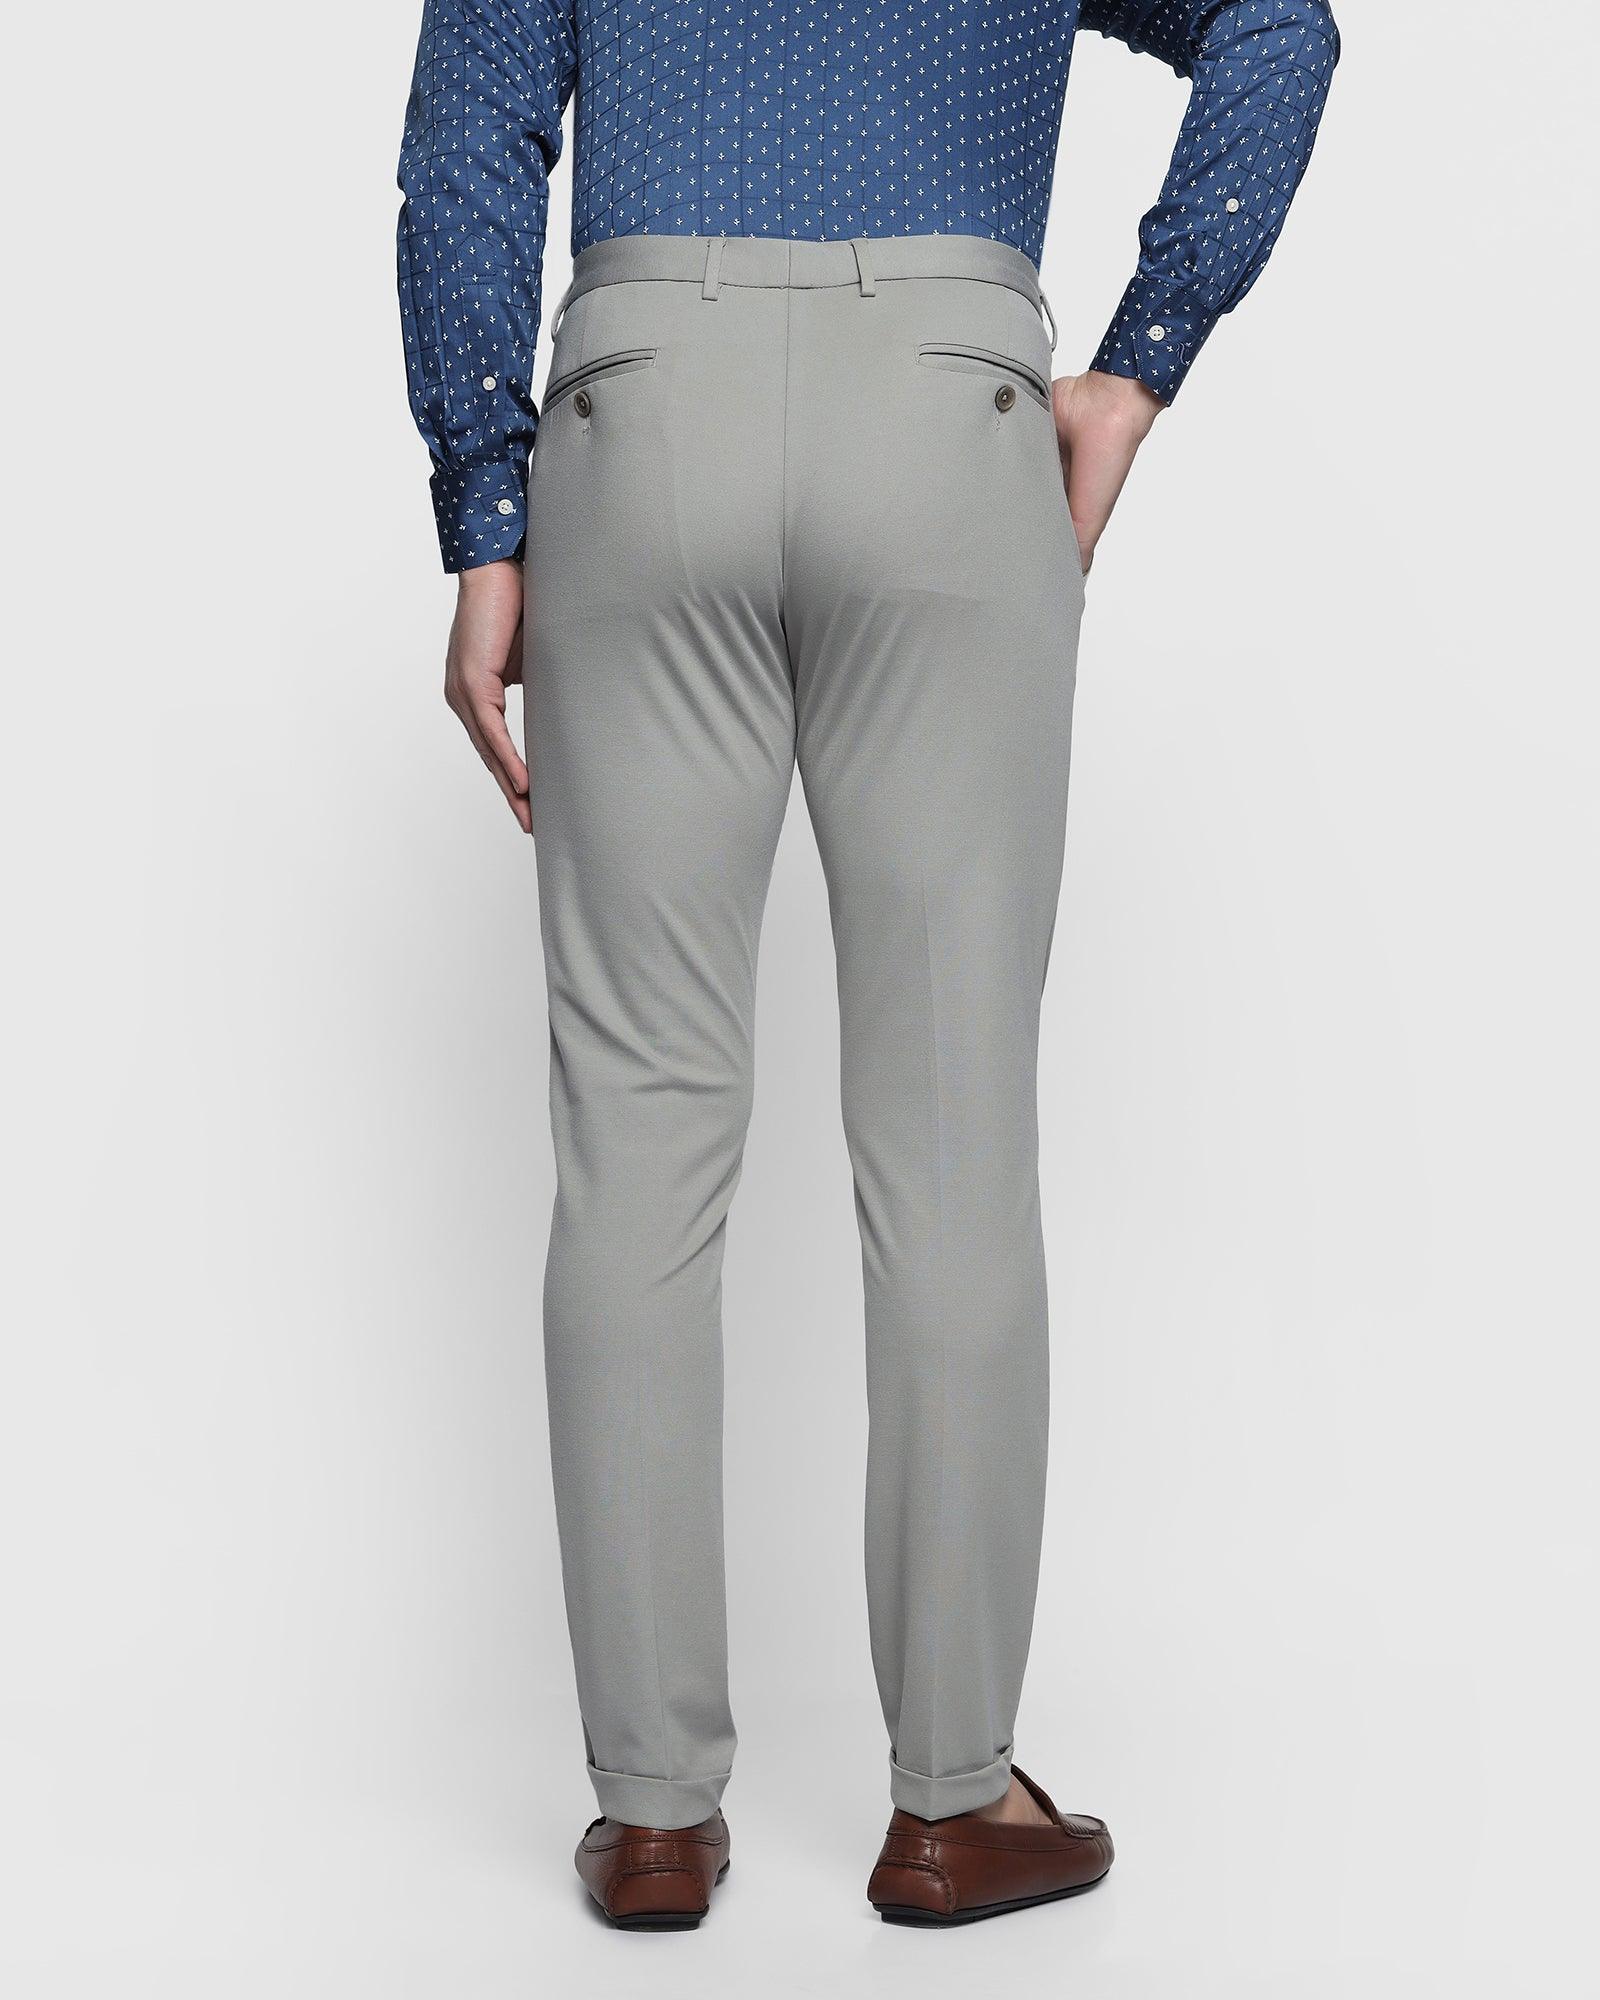 Dark Grey Slim Fit Suit Pants - Jim's Formal Wear – Jim's Formal Wear Shop